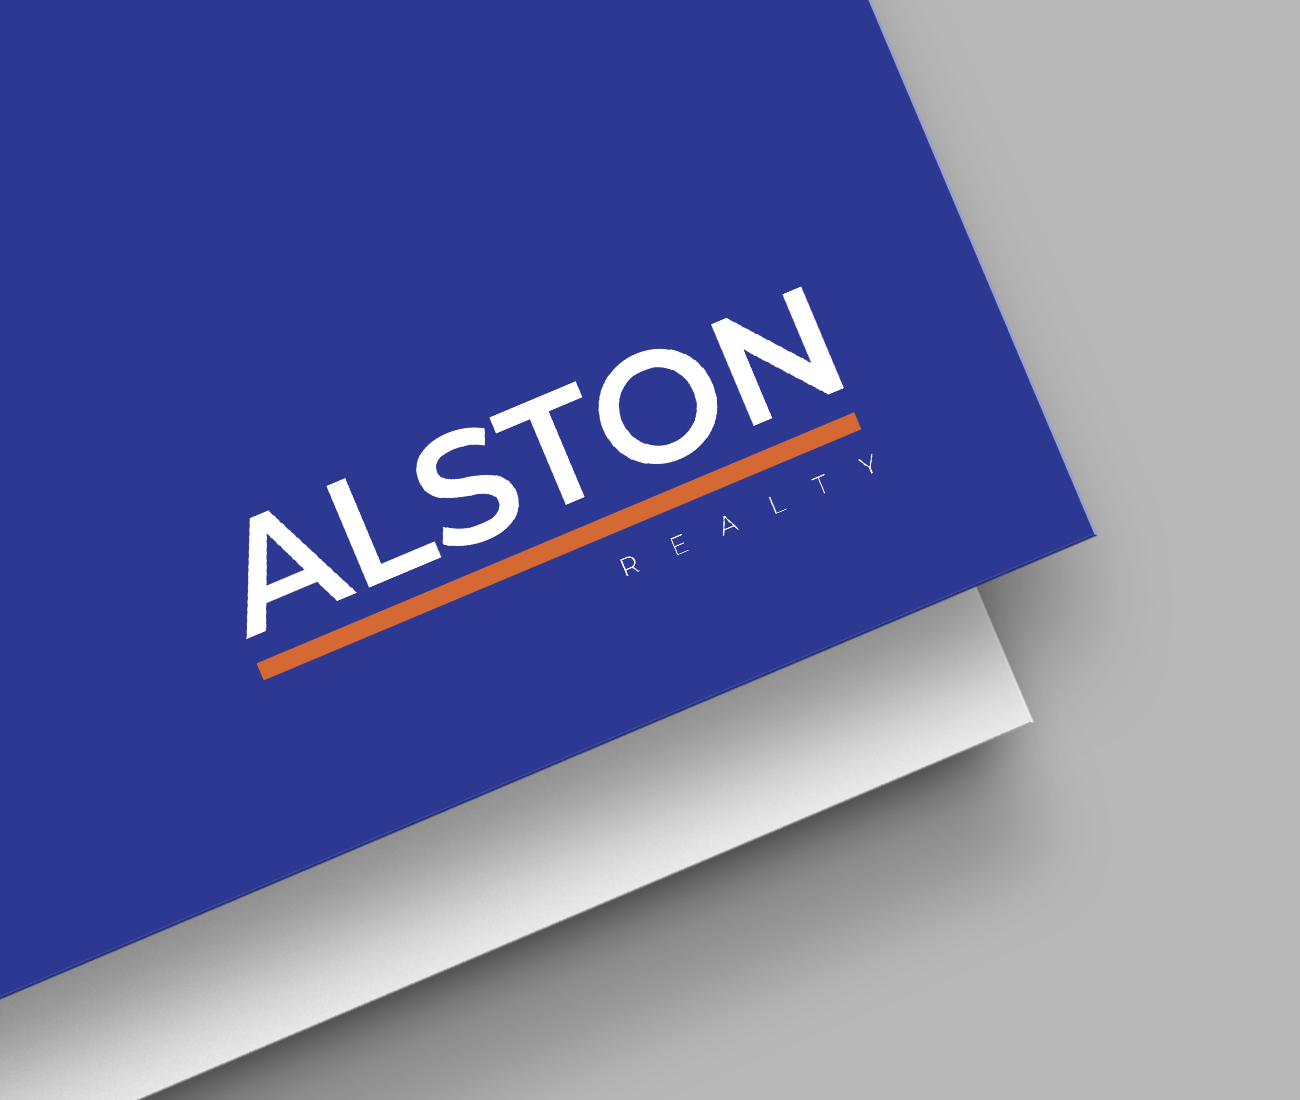 Alston-Logo-Feature-1300x1100